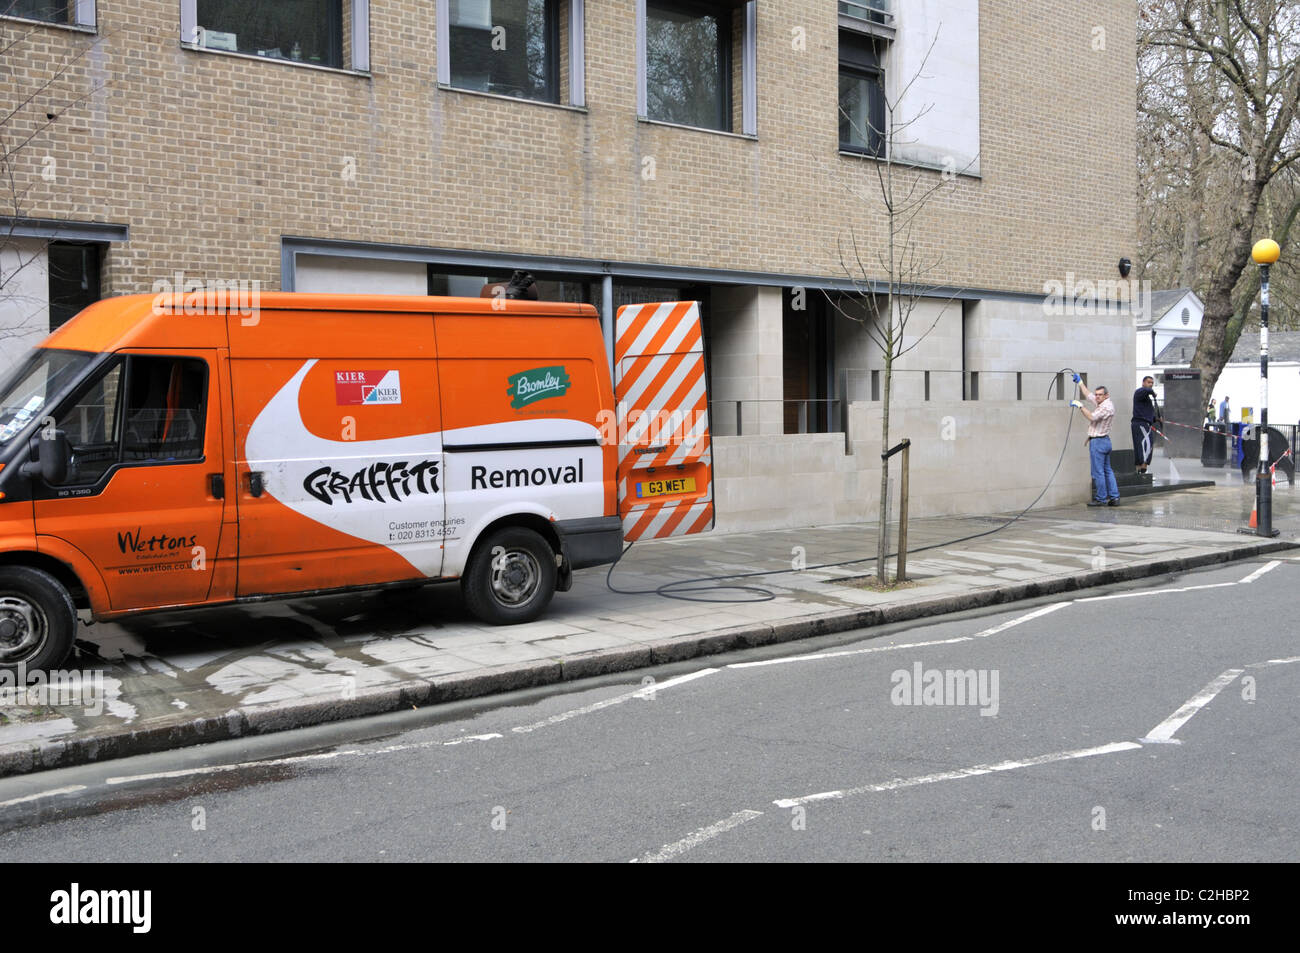 Removing graffiti, London, UK. Stock Photo